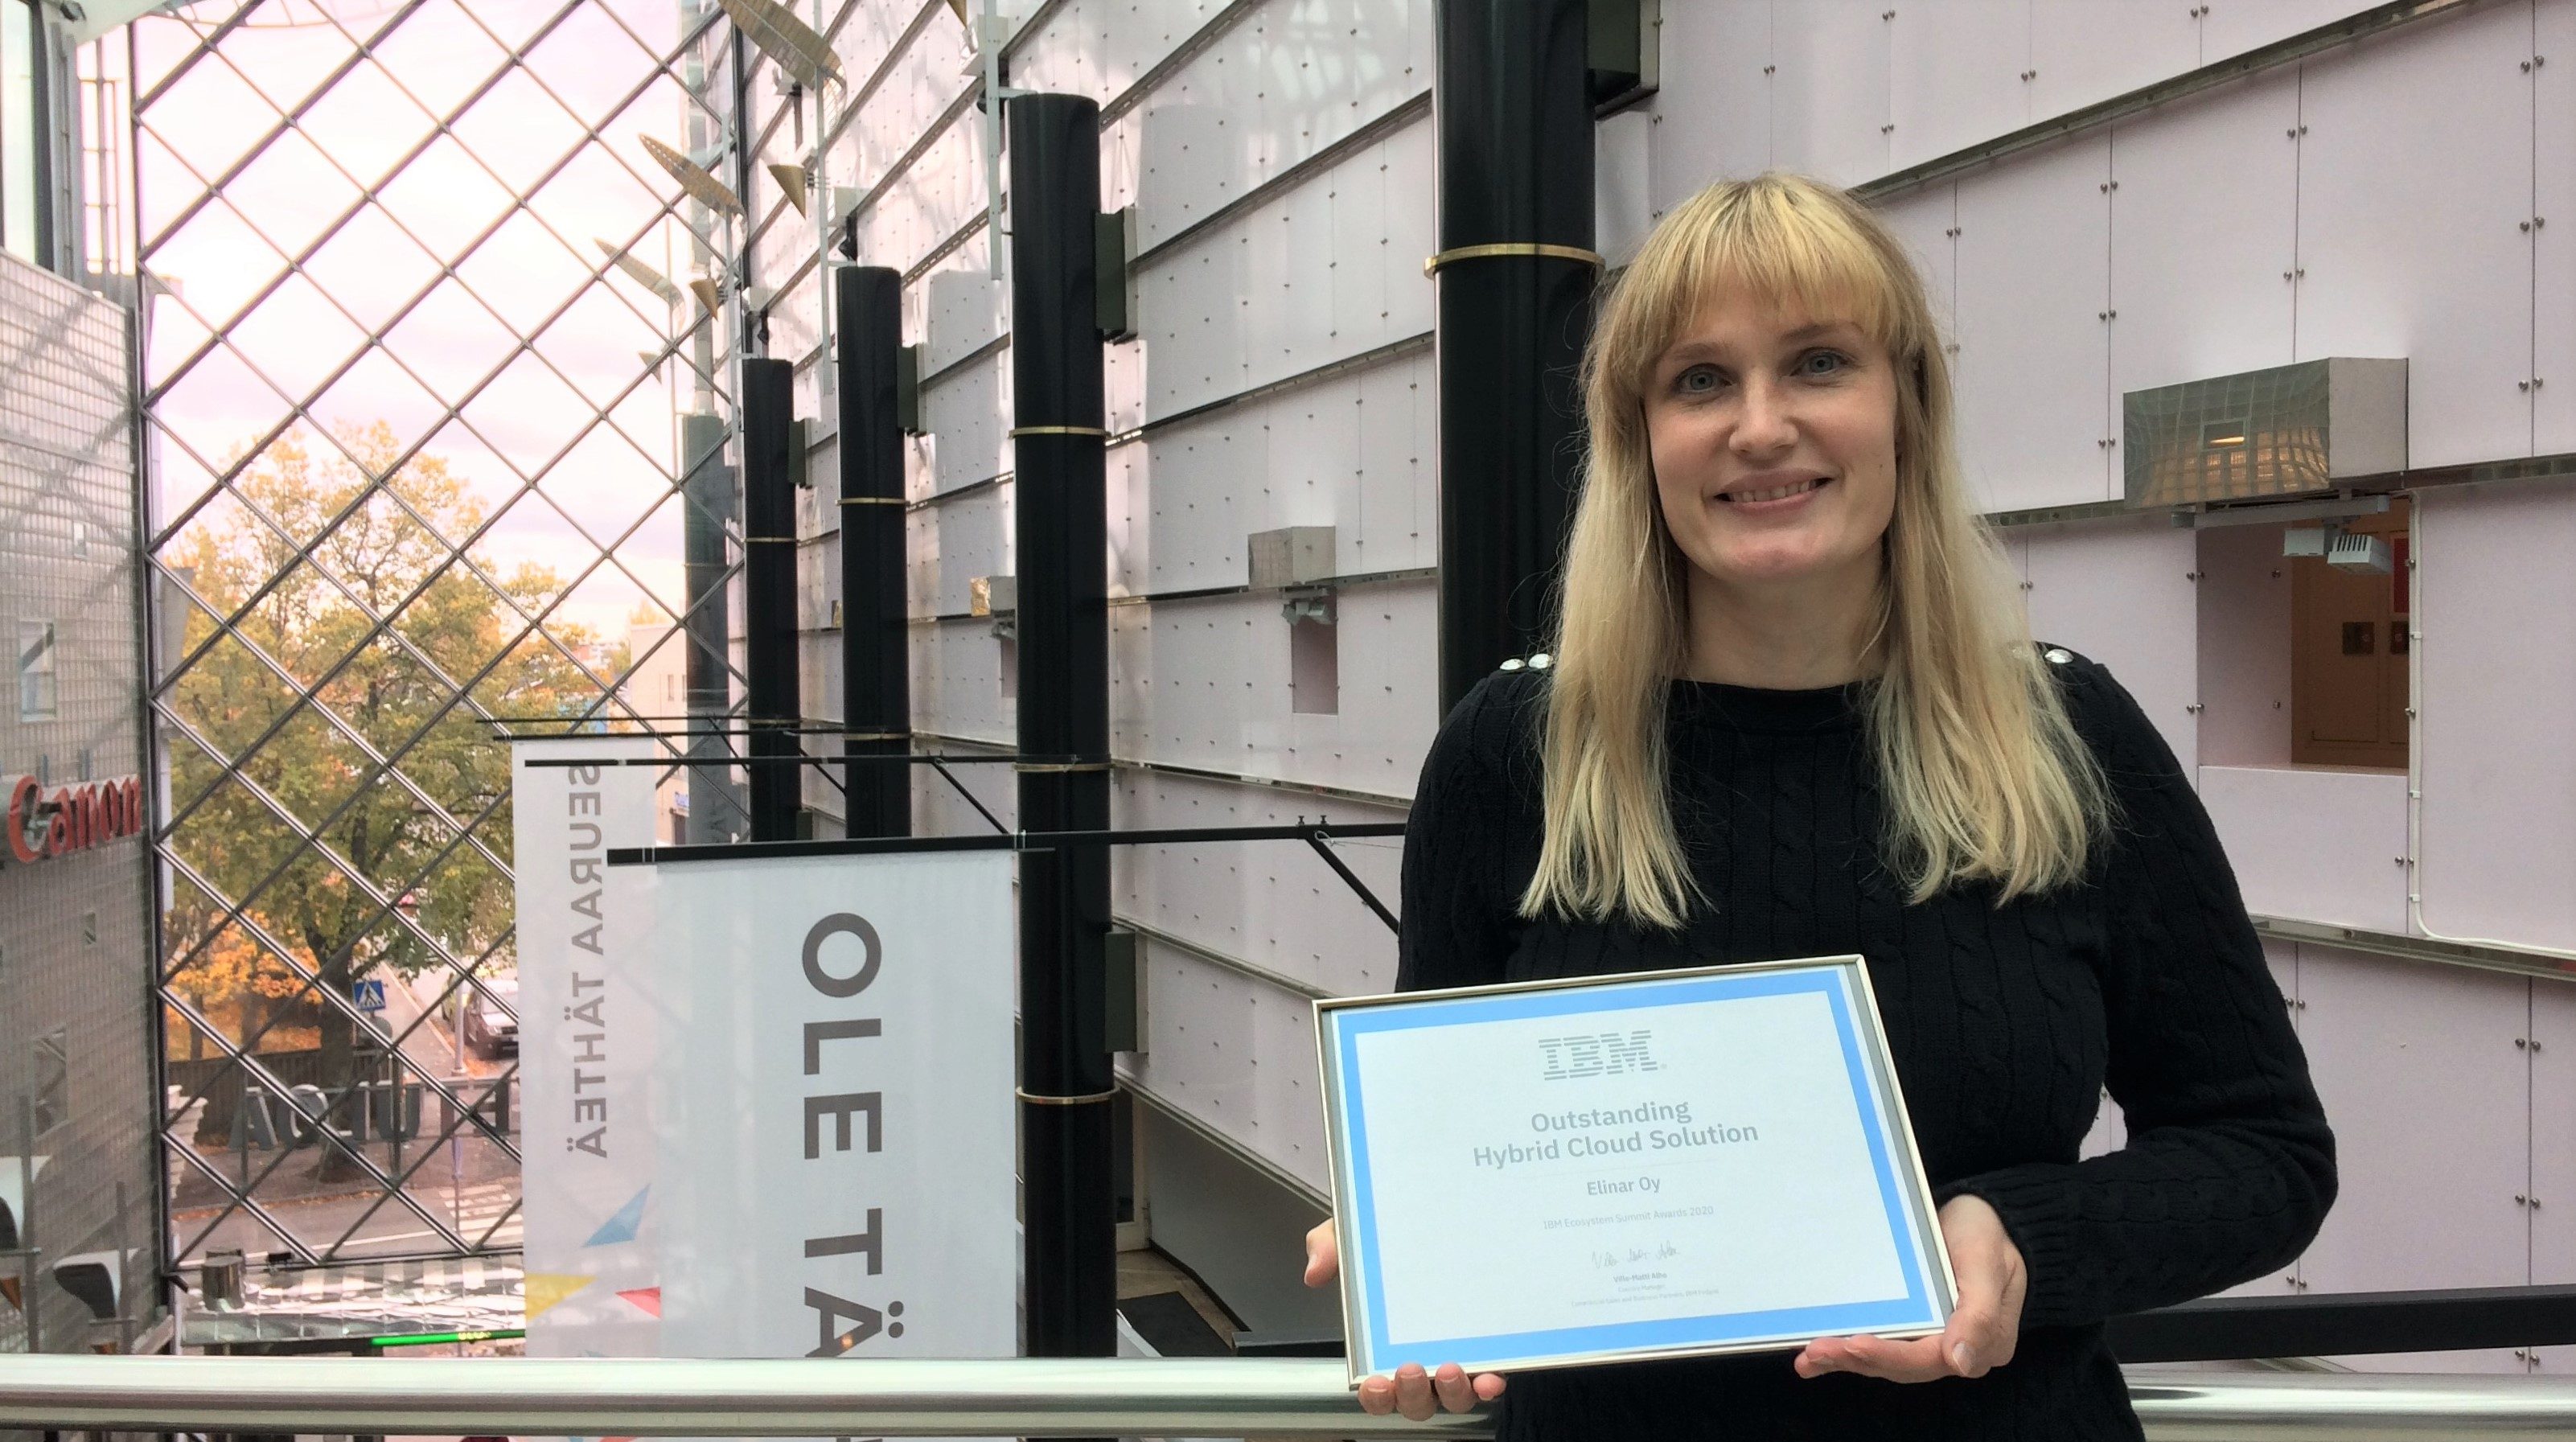 Leena Tähti holds an award for Elinar's AI integration with IBM's technology